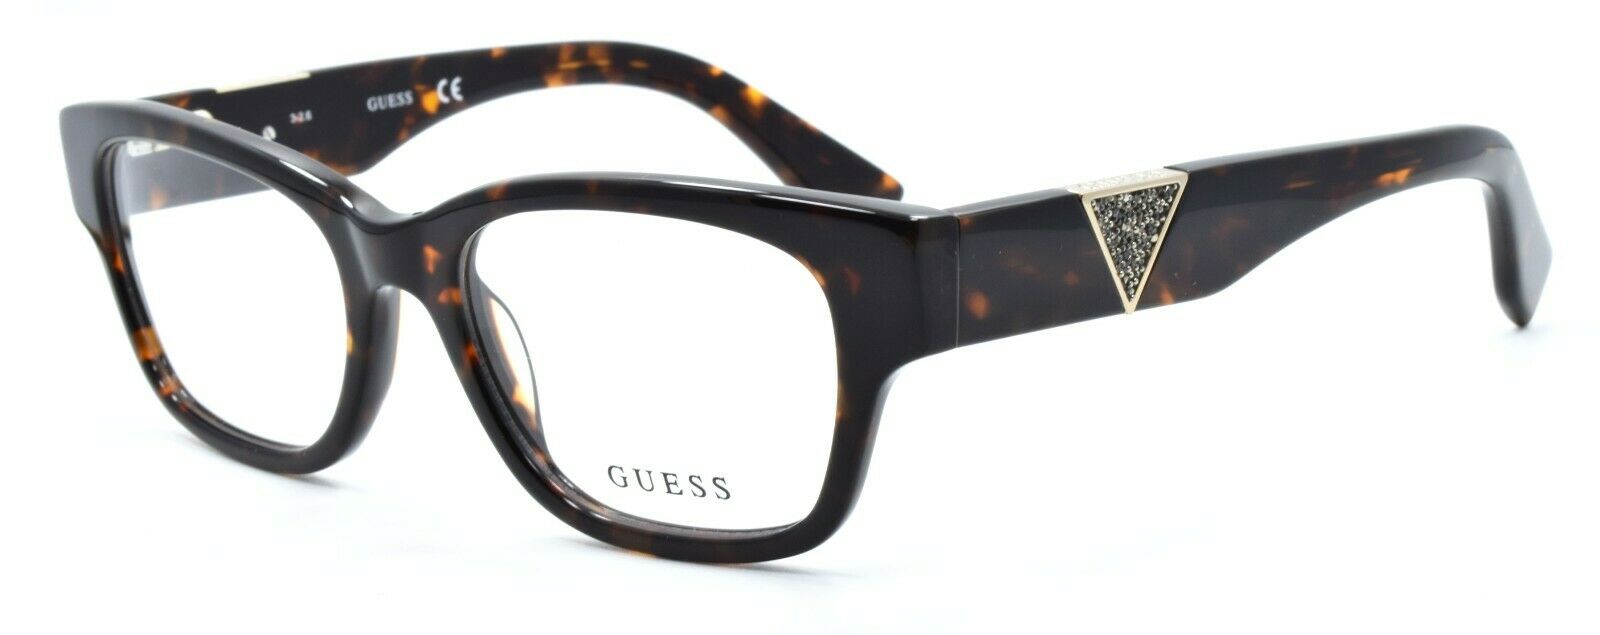 1-GUESS GU2576 052 Women's Eyeglasses Frames 51-18-135 Dark Havana + CASE-664689792078-IKSpecs